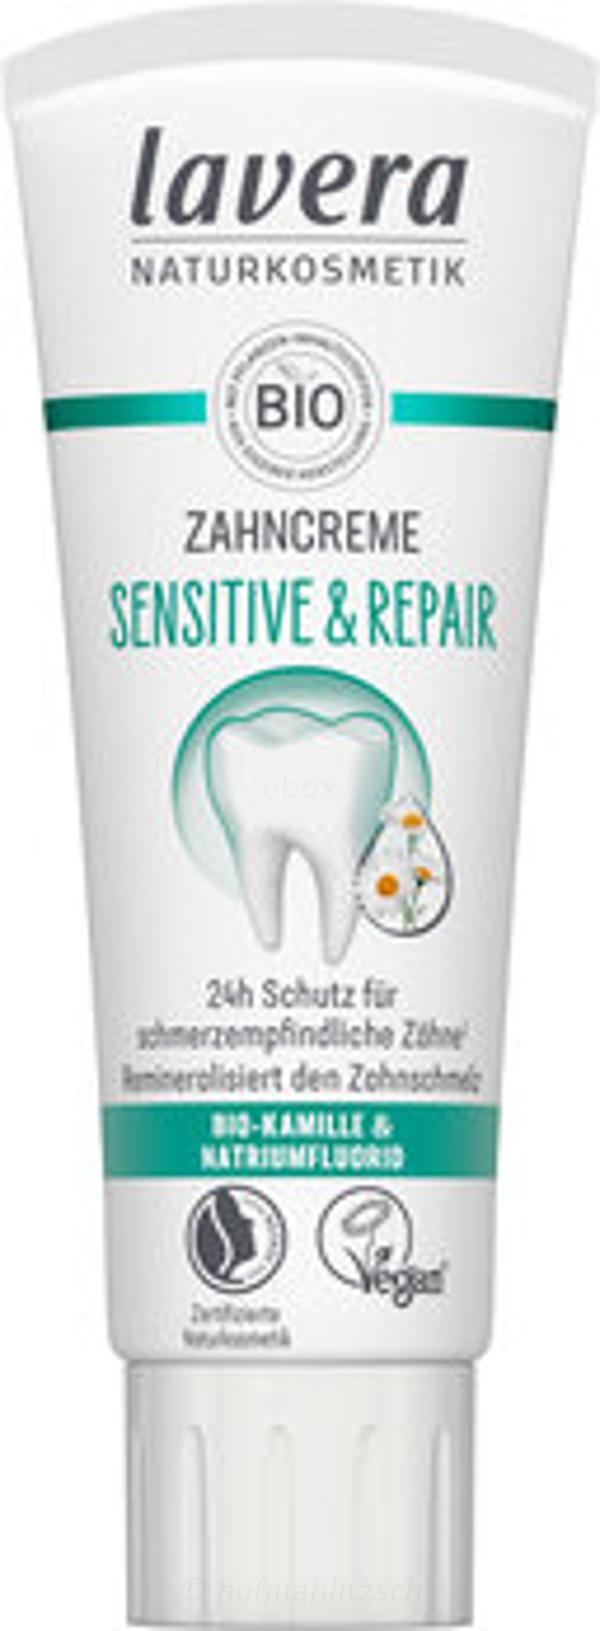 Produktfoto zu Zahncreme sensitiv & repair